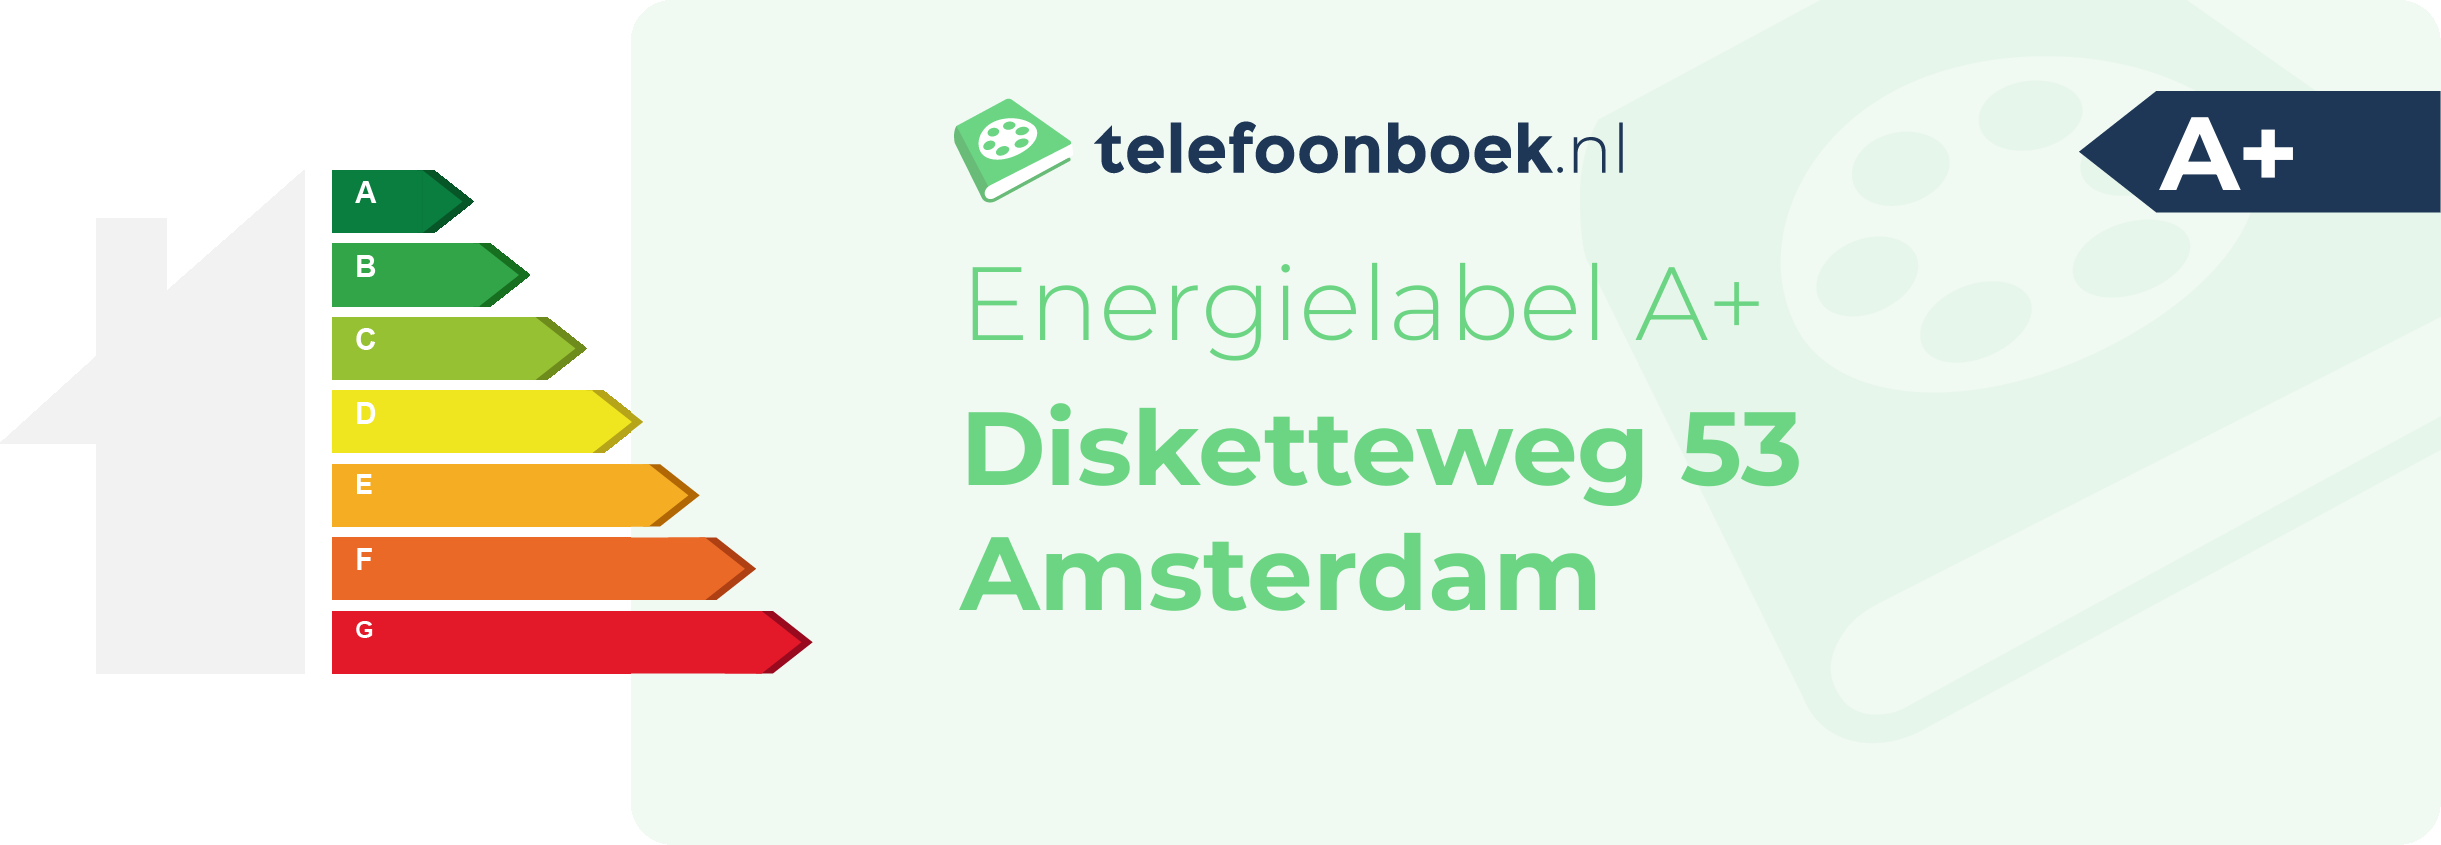 Energielabel Disketteweg 53 Amsterdam